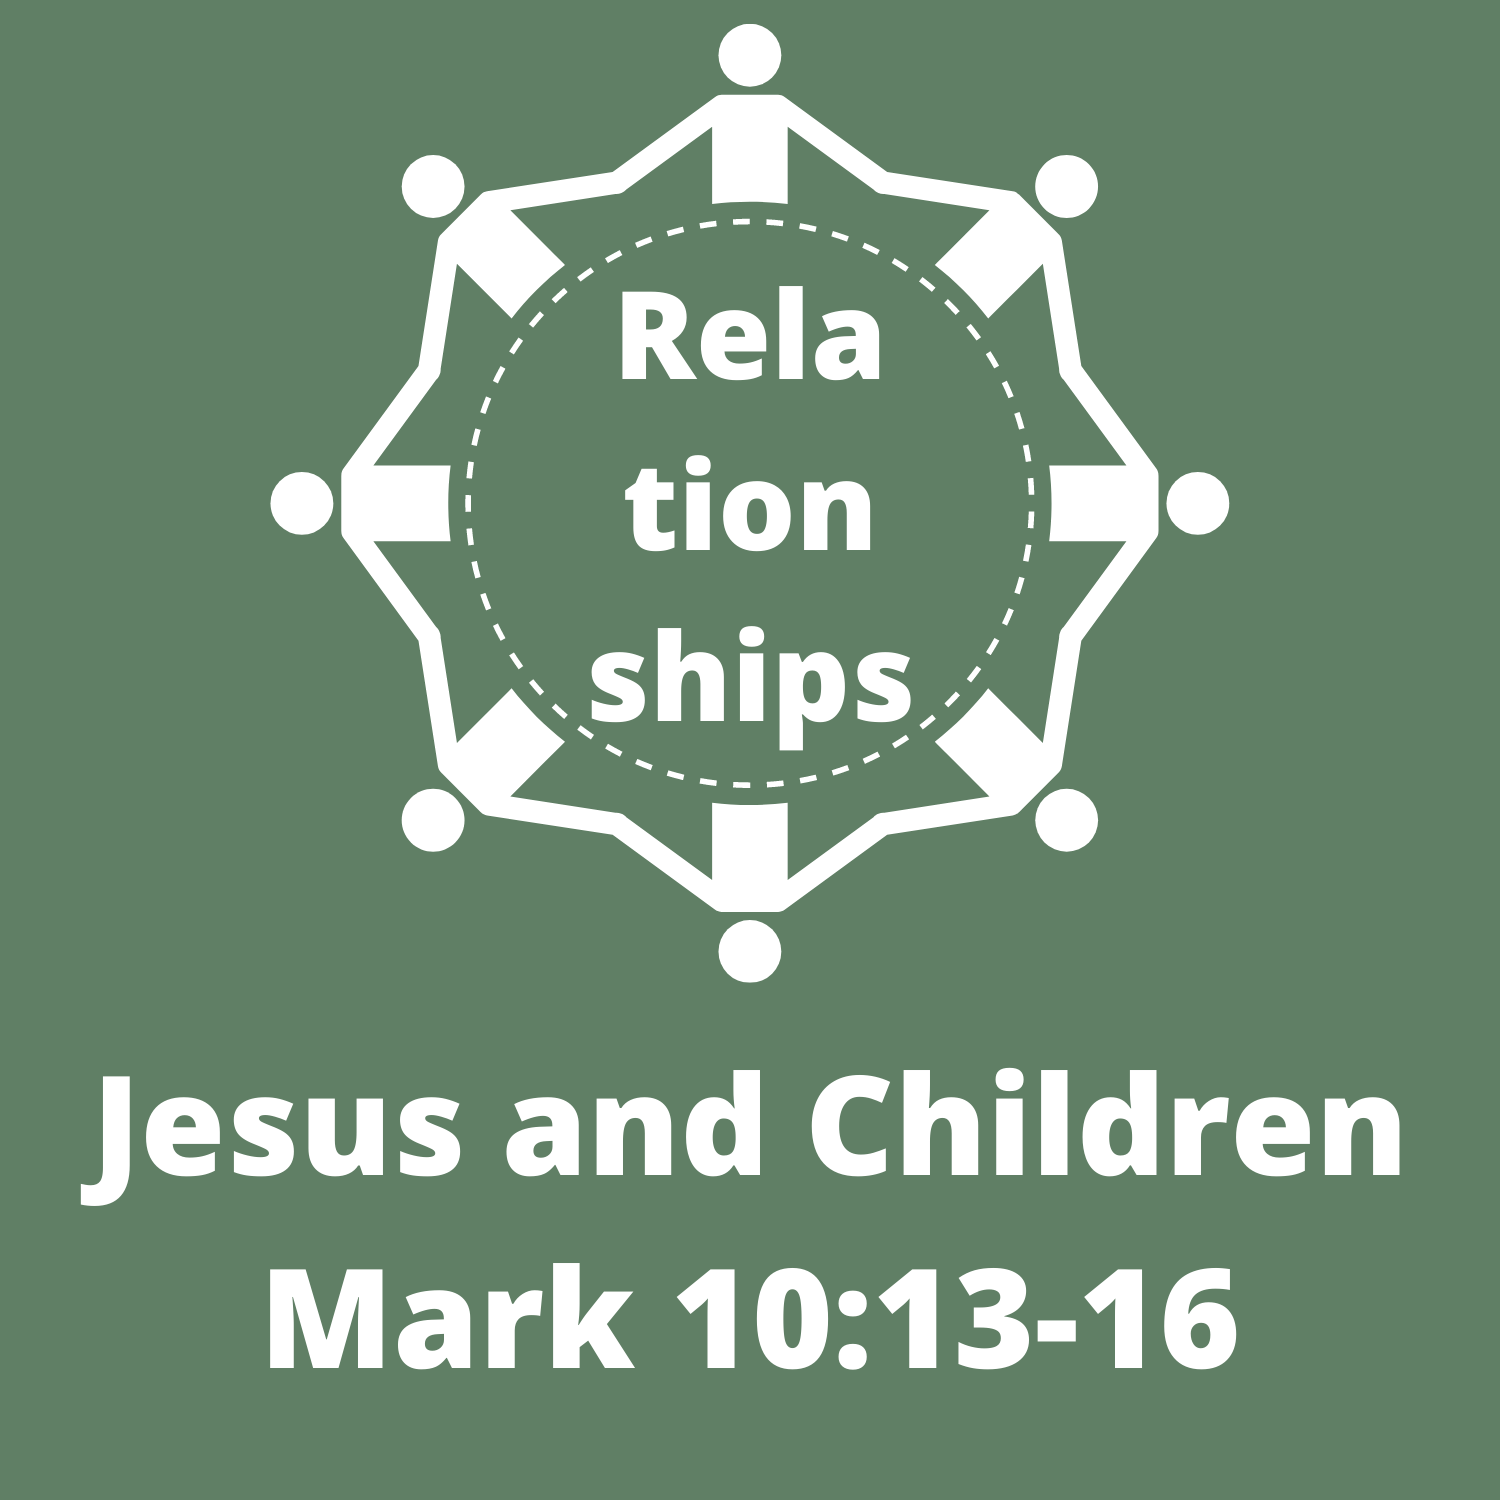 Mark 10:13-16 - Jesus and Children